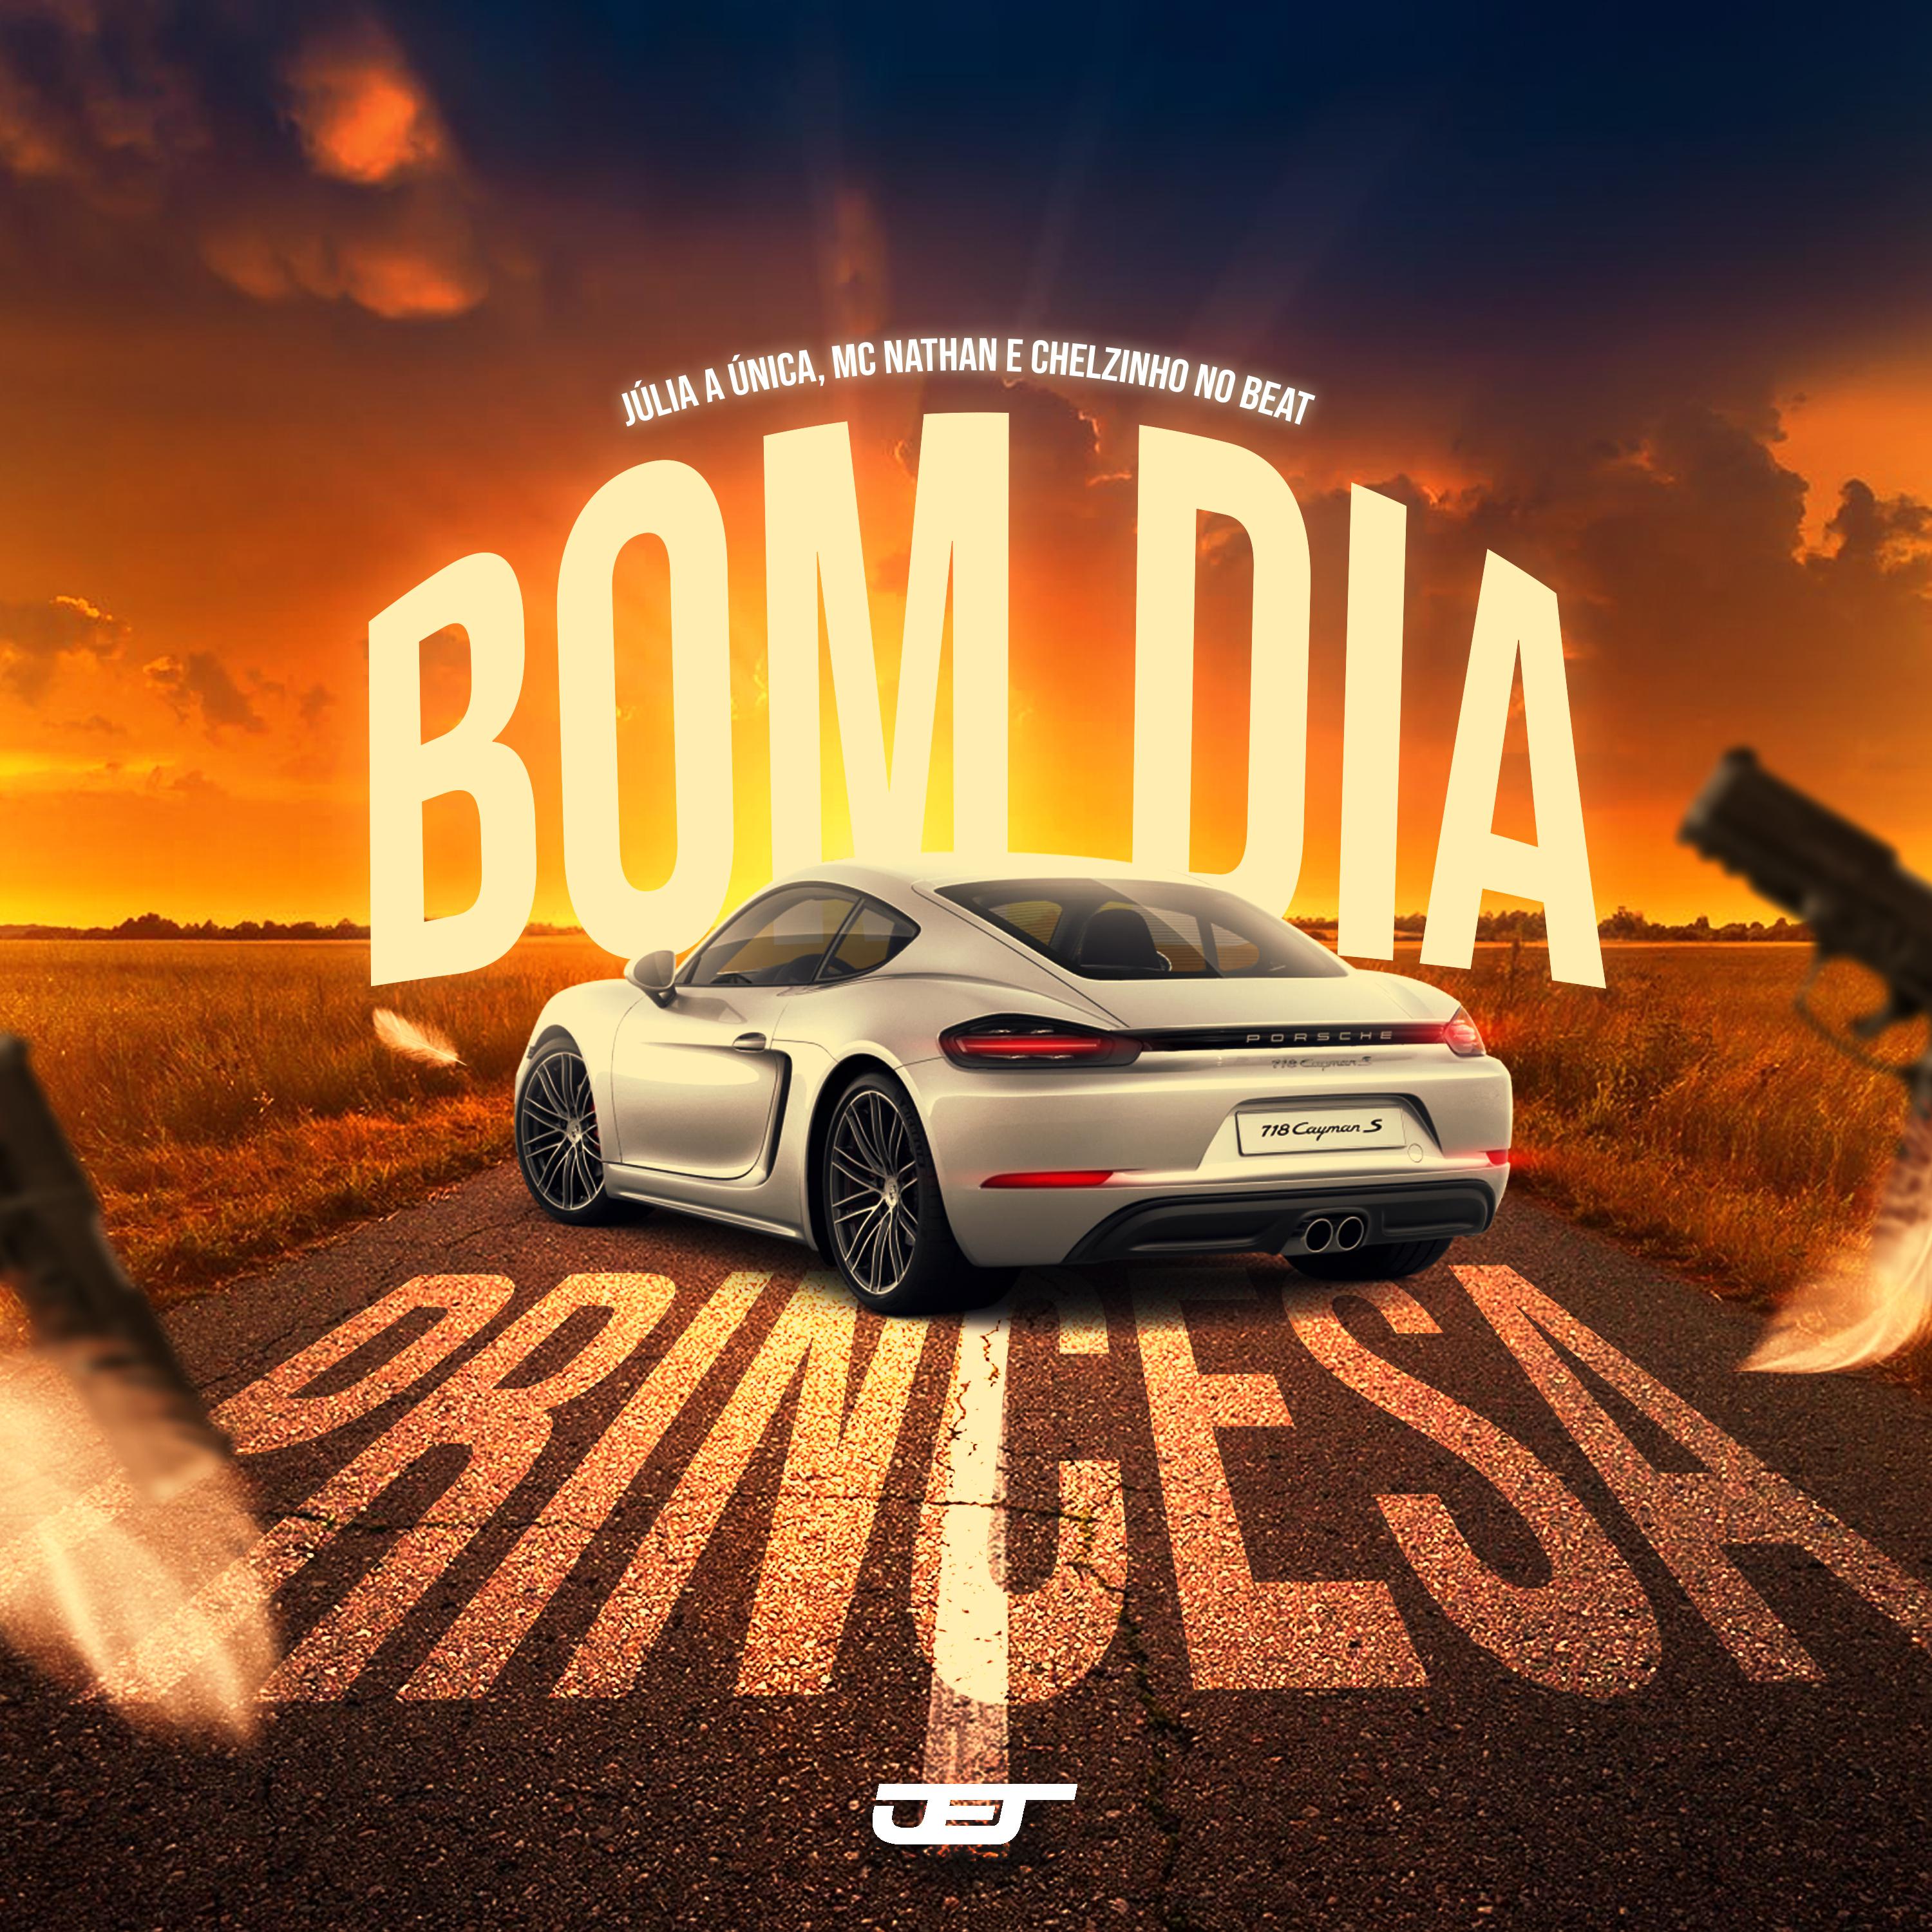 Постер альбома Bom Dia Princesa